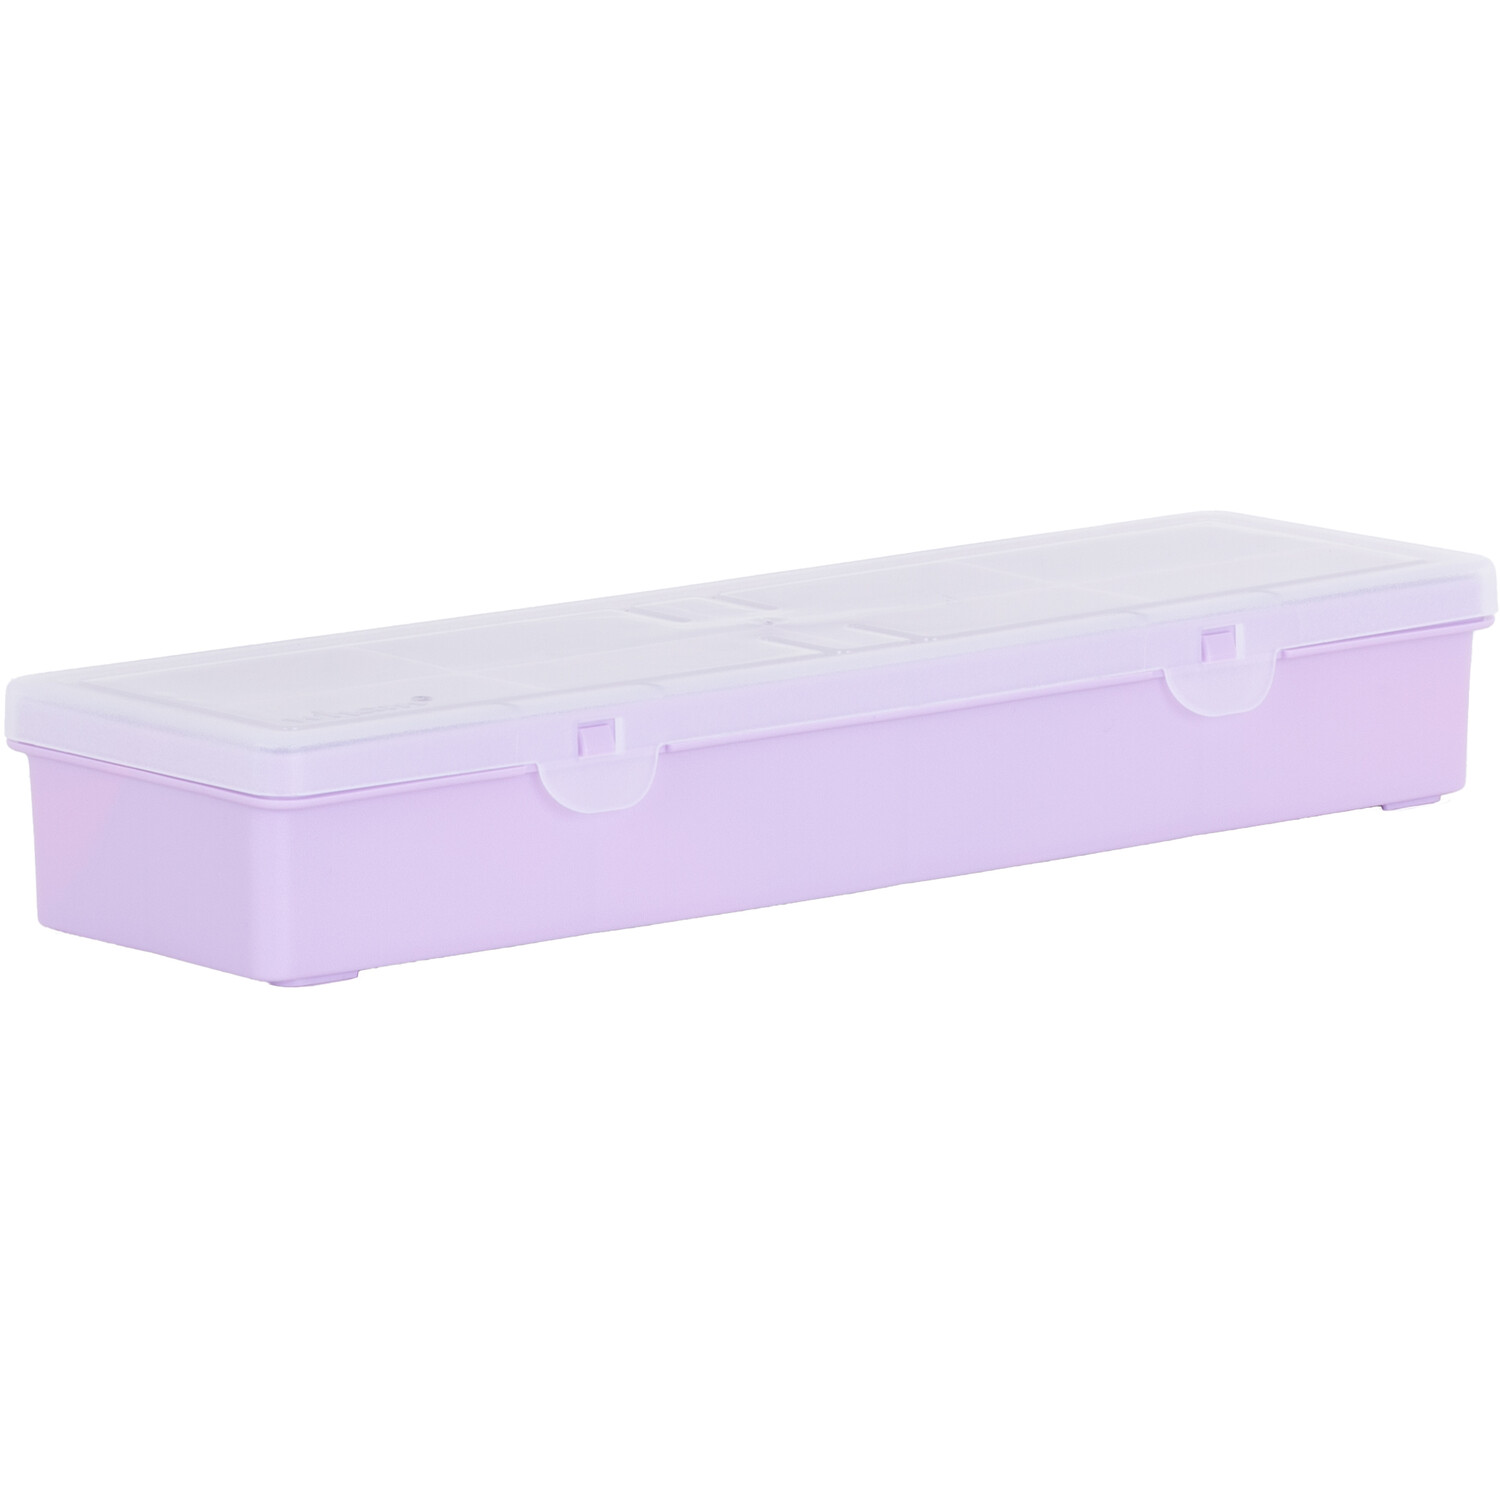 Organiser Box  - Lilac / Medium Image 2